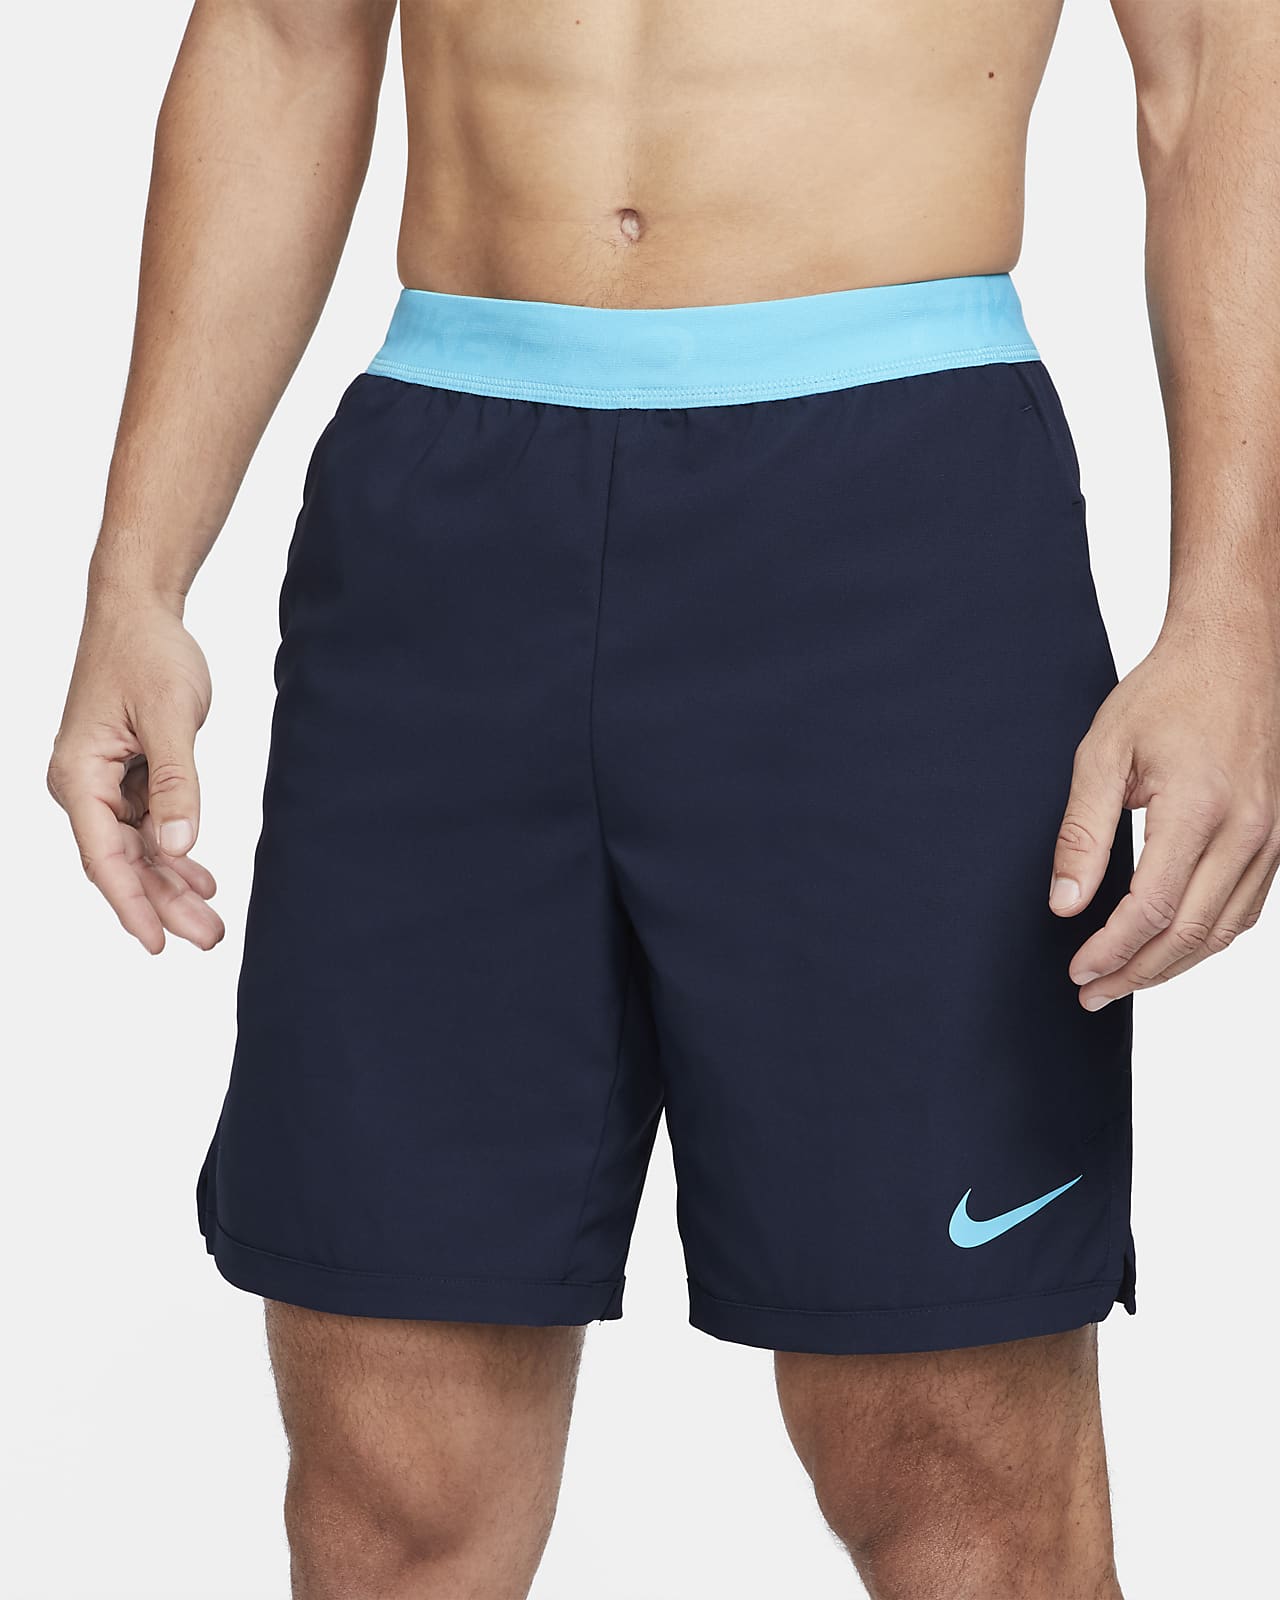 Men's Shorts. Nike CA